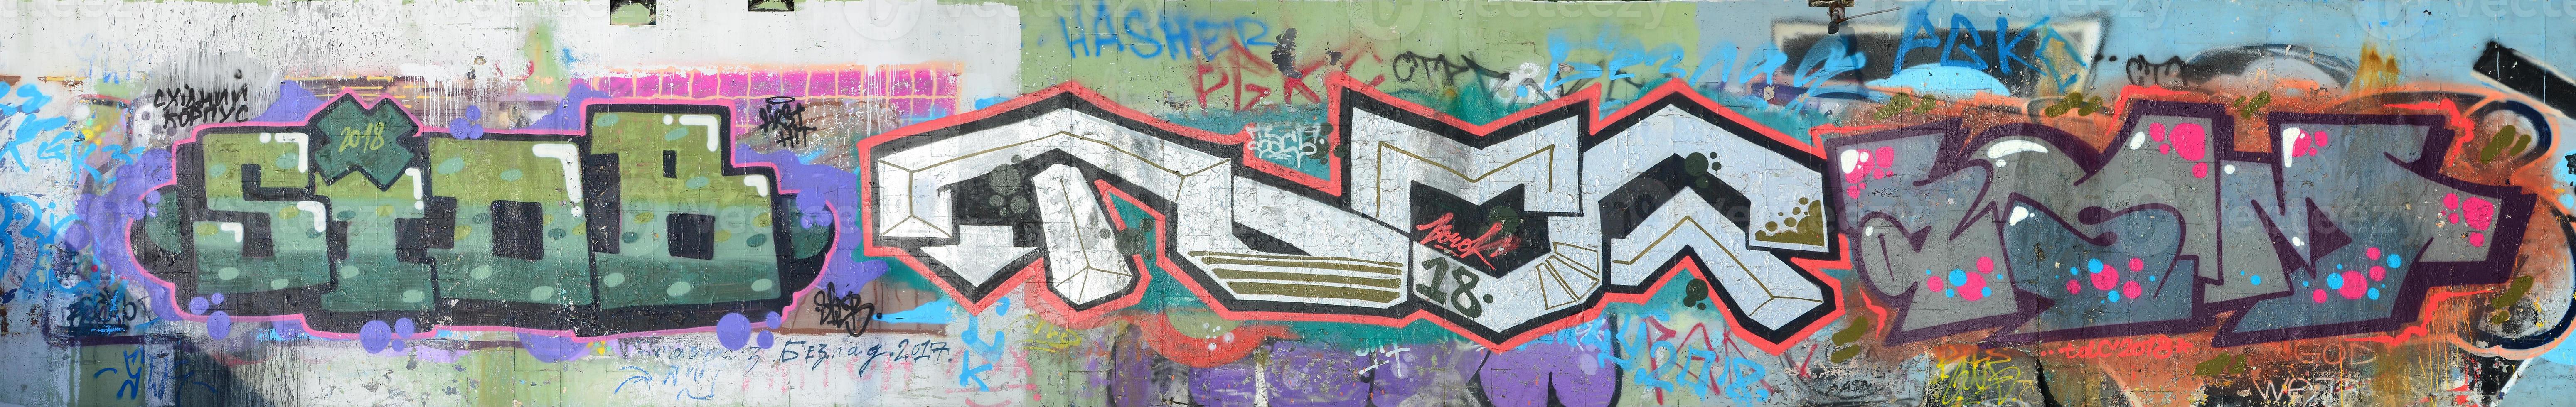 de oud muur, geschilderd in kleur graffiti tekening met aërosol pai foto